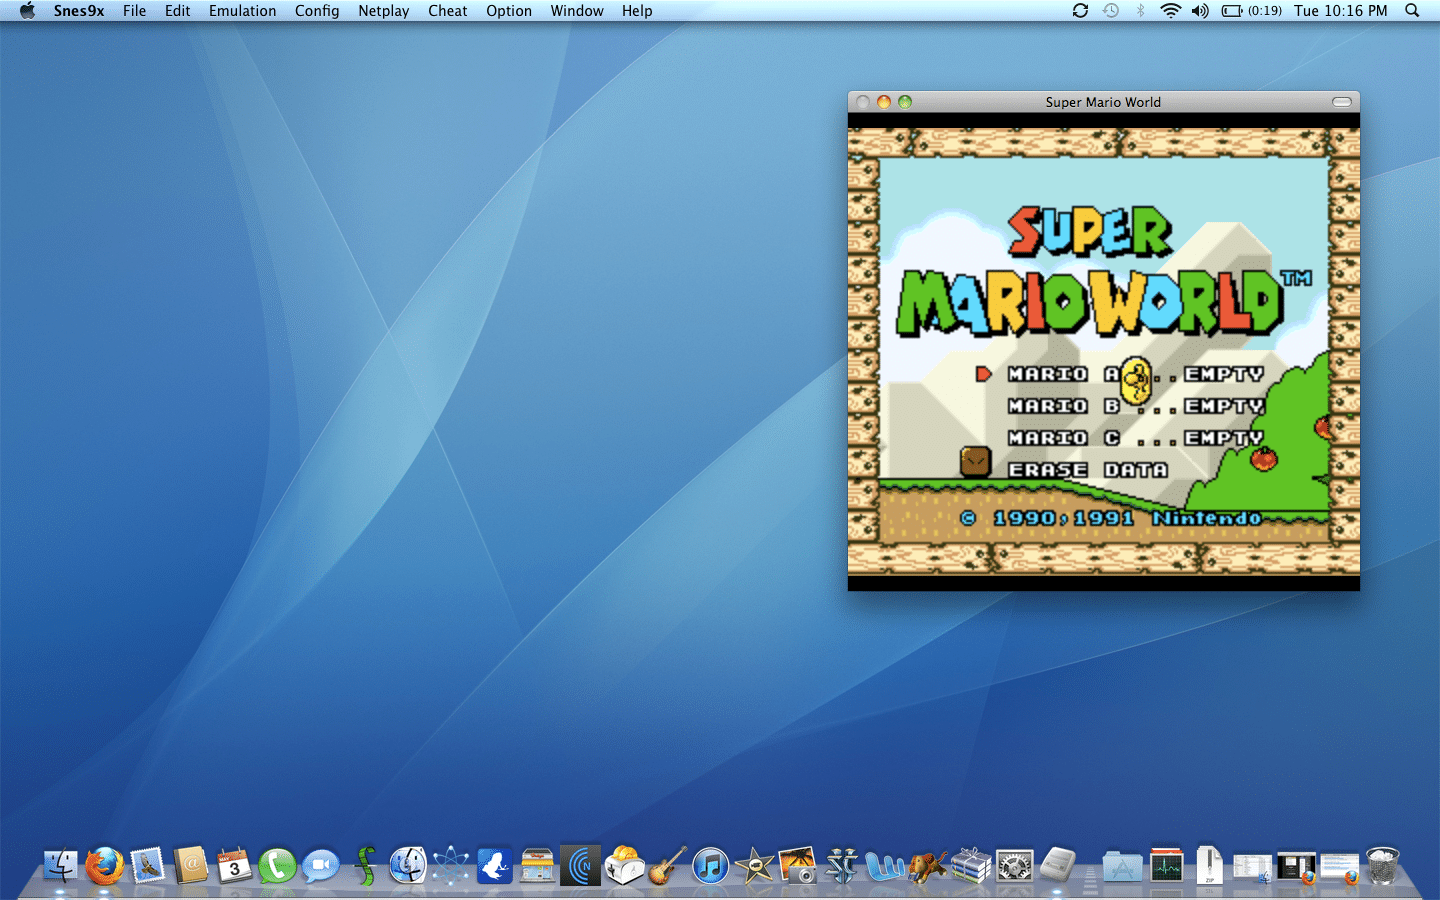 mac emulator game